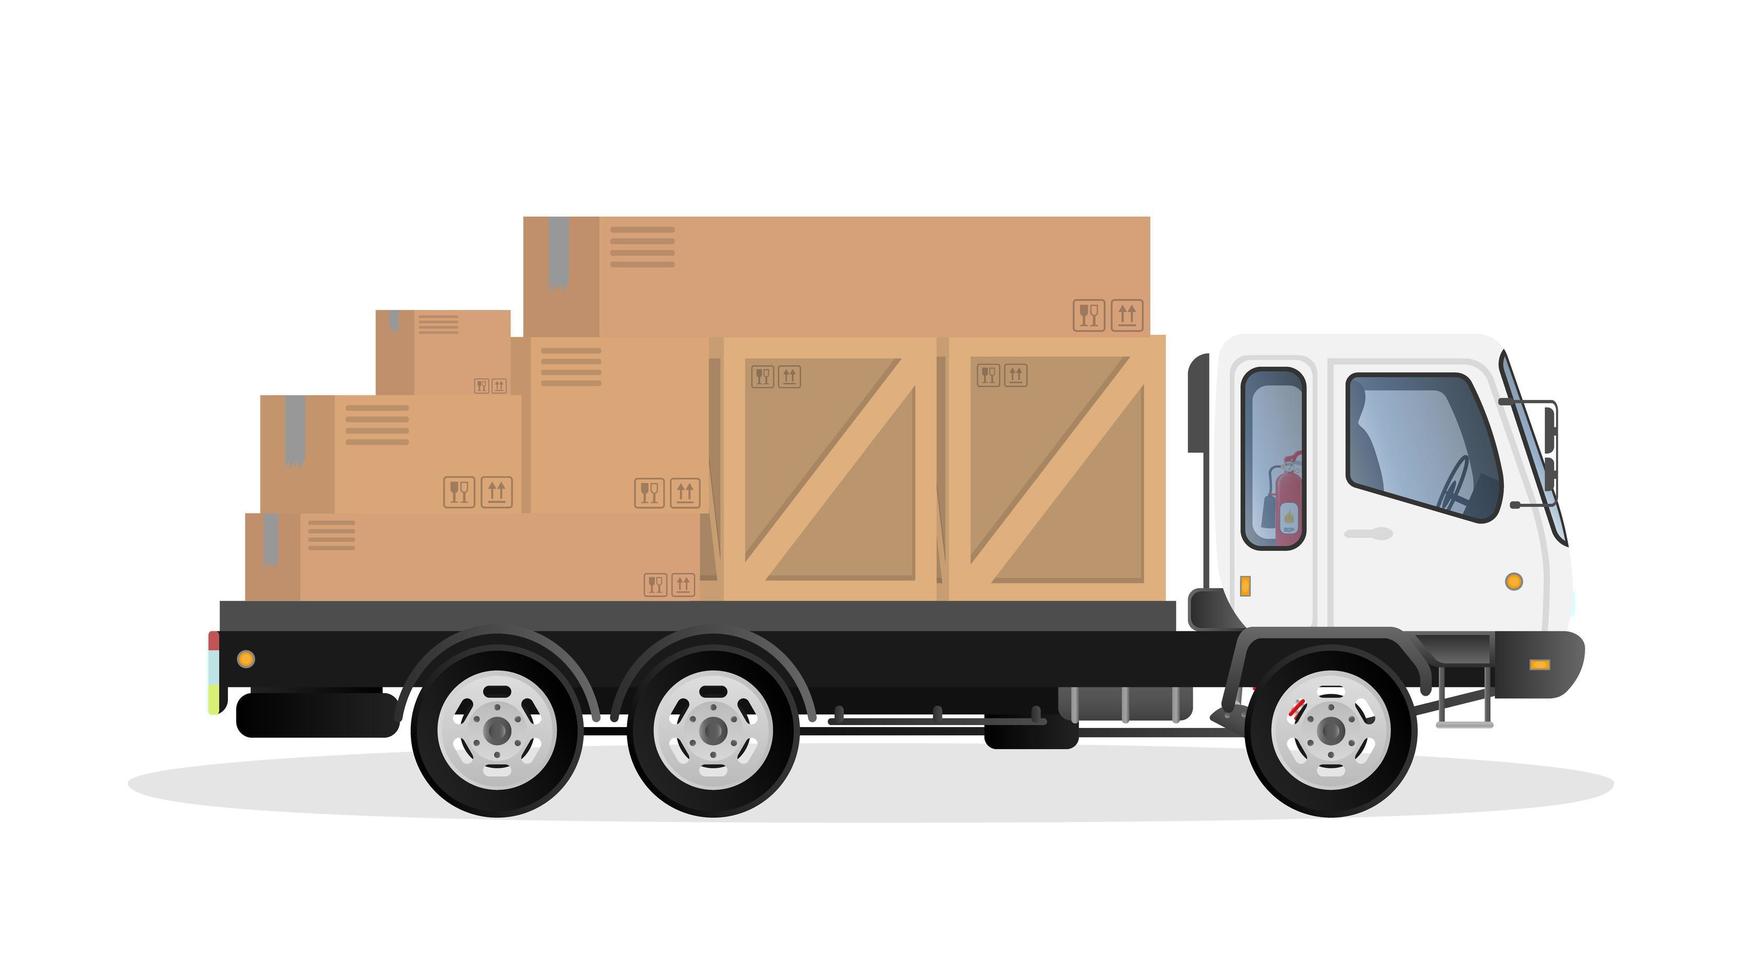 caminhão carrega caixas. conceito de entrega e carregamento de carga. isolado. vetor. vetor